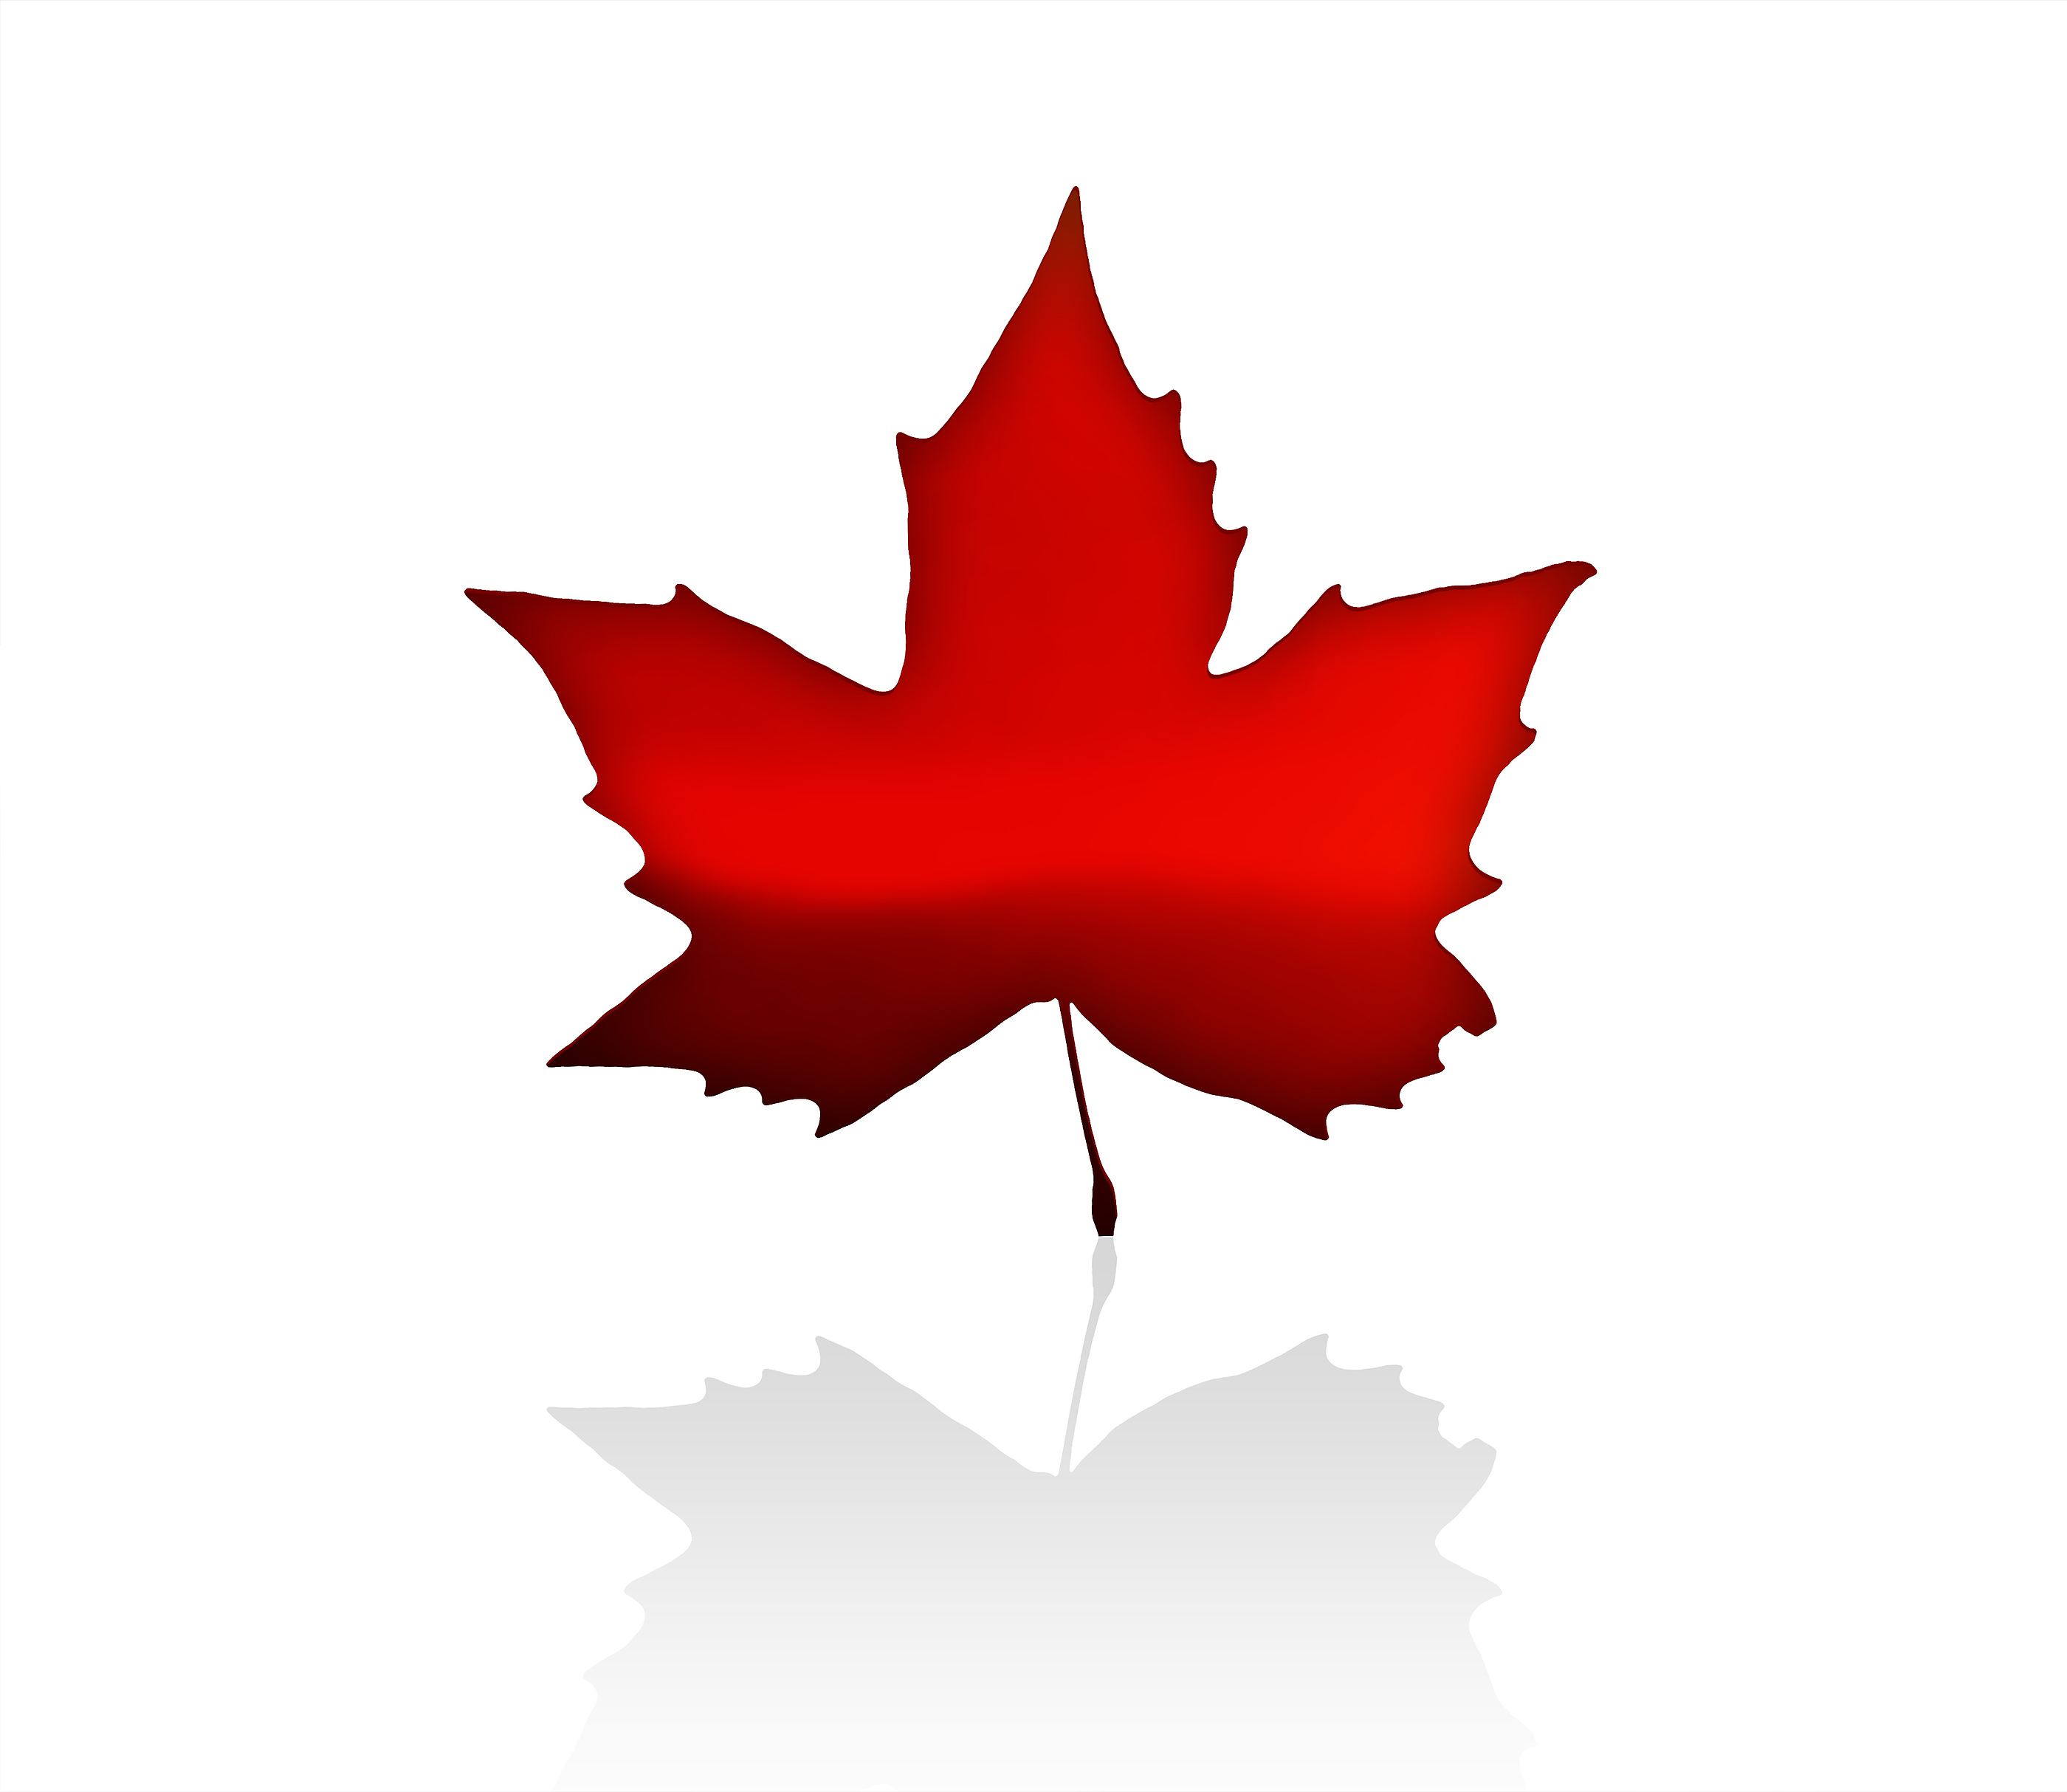 Canadian Leaf: Symbolizing Canada's Natural Beauty Cultural